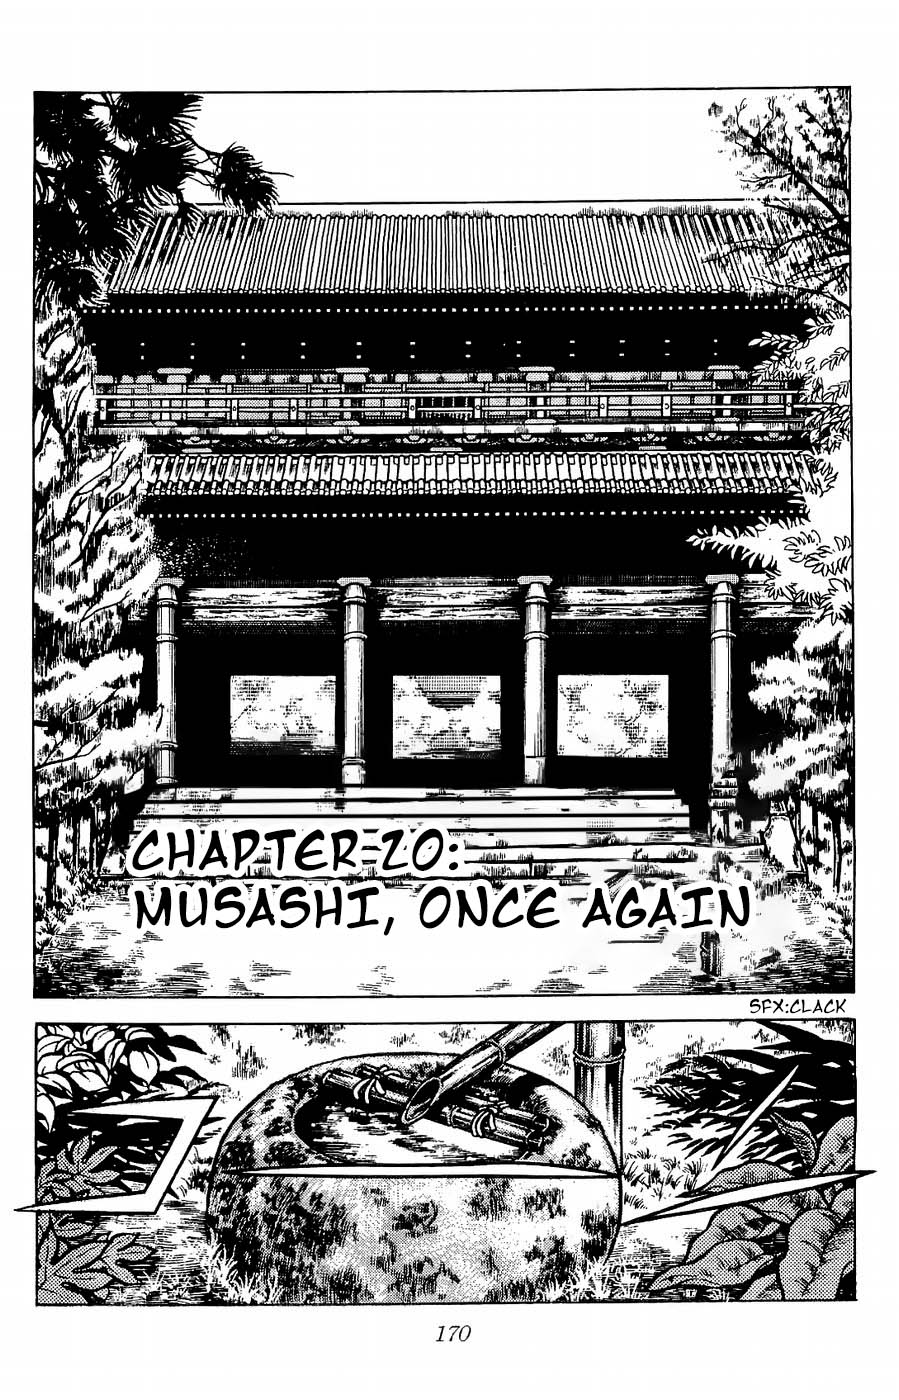 Fuuma no Kojiro Vol. 3 Ch. 20 Musashi, Once Again